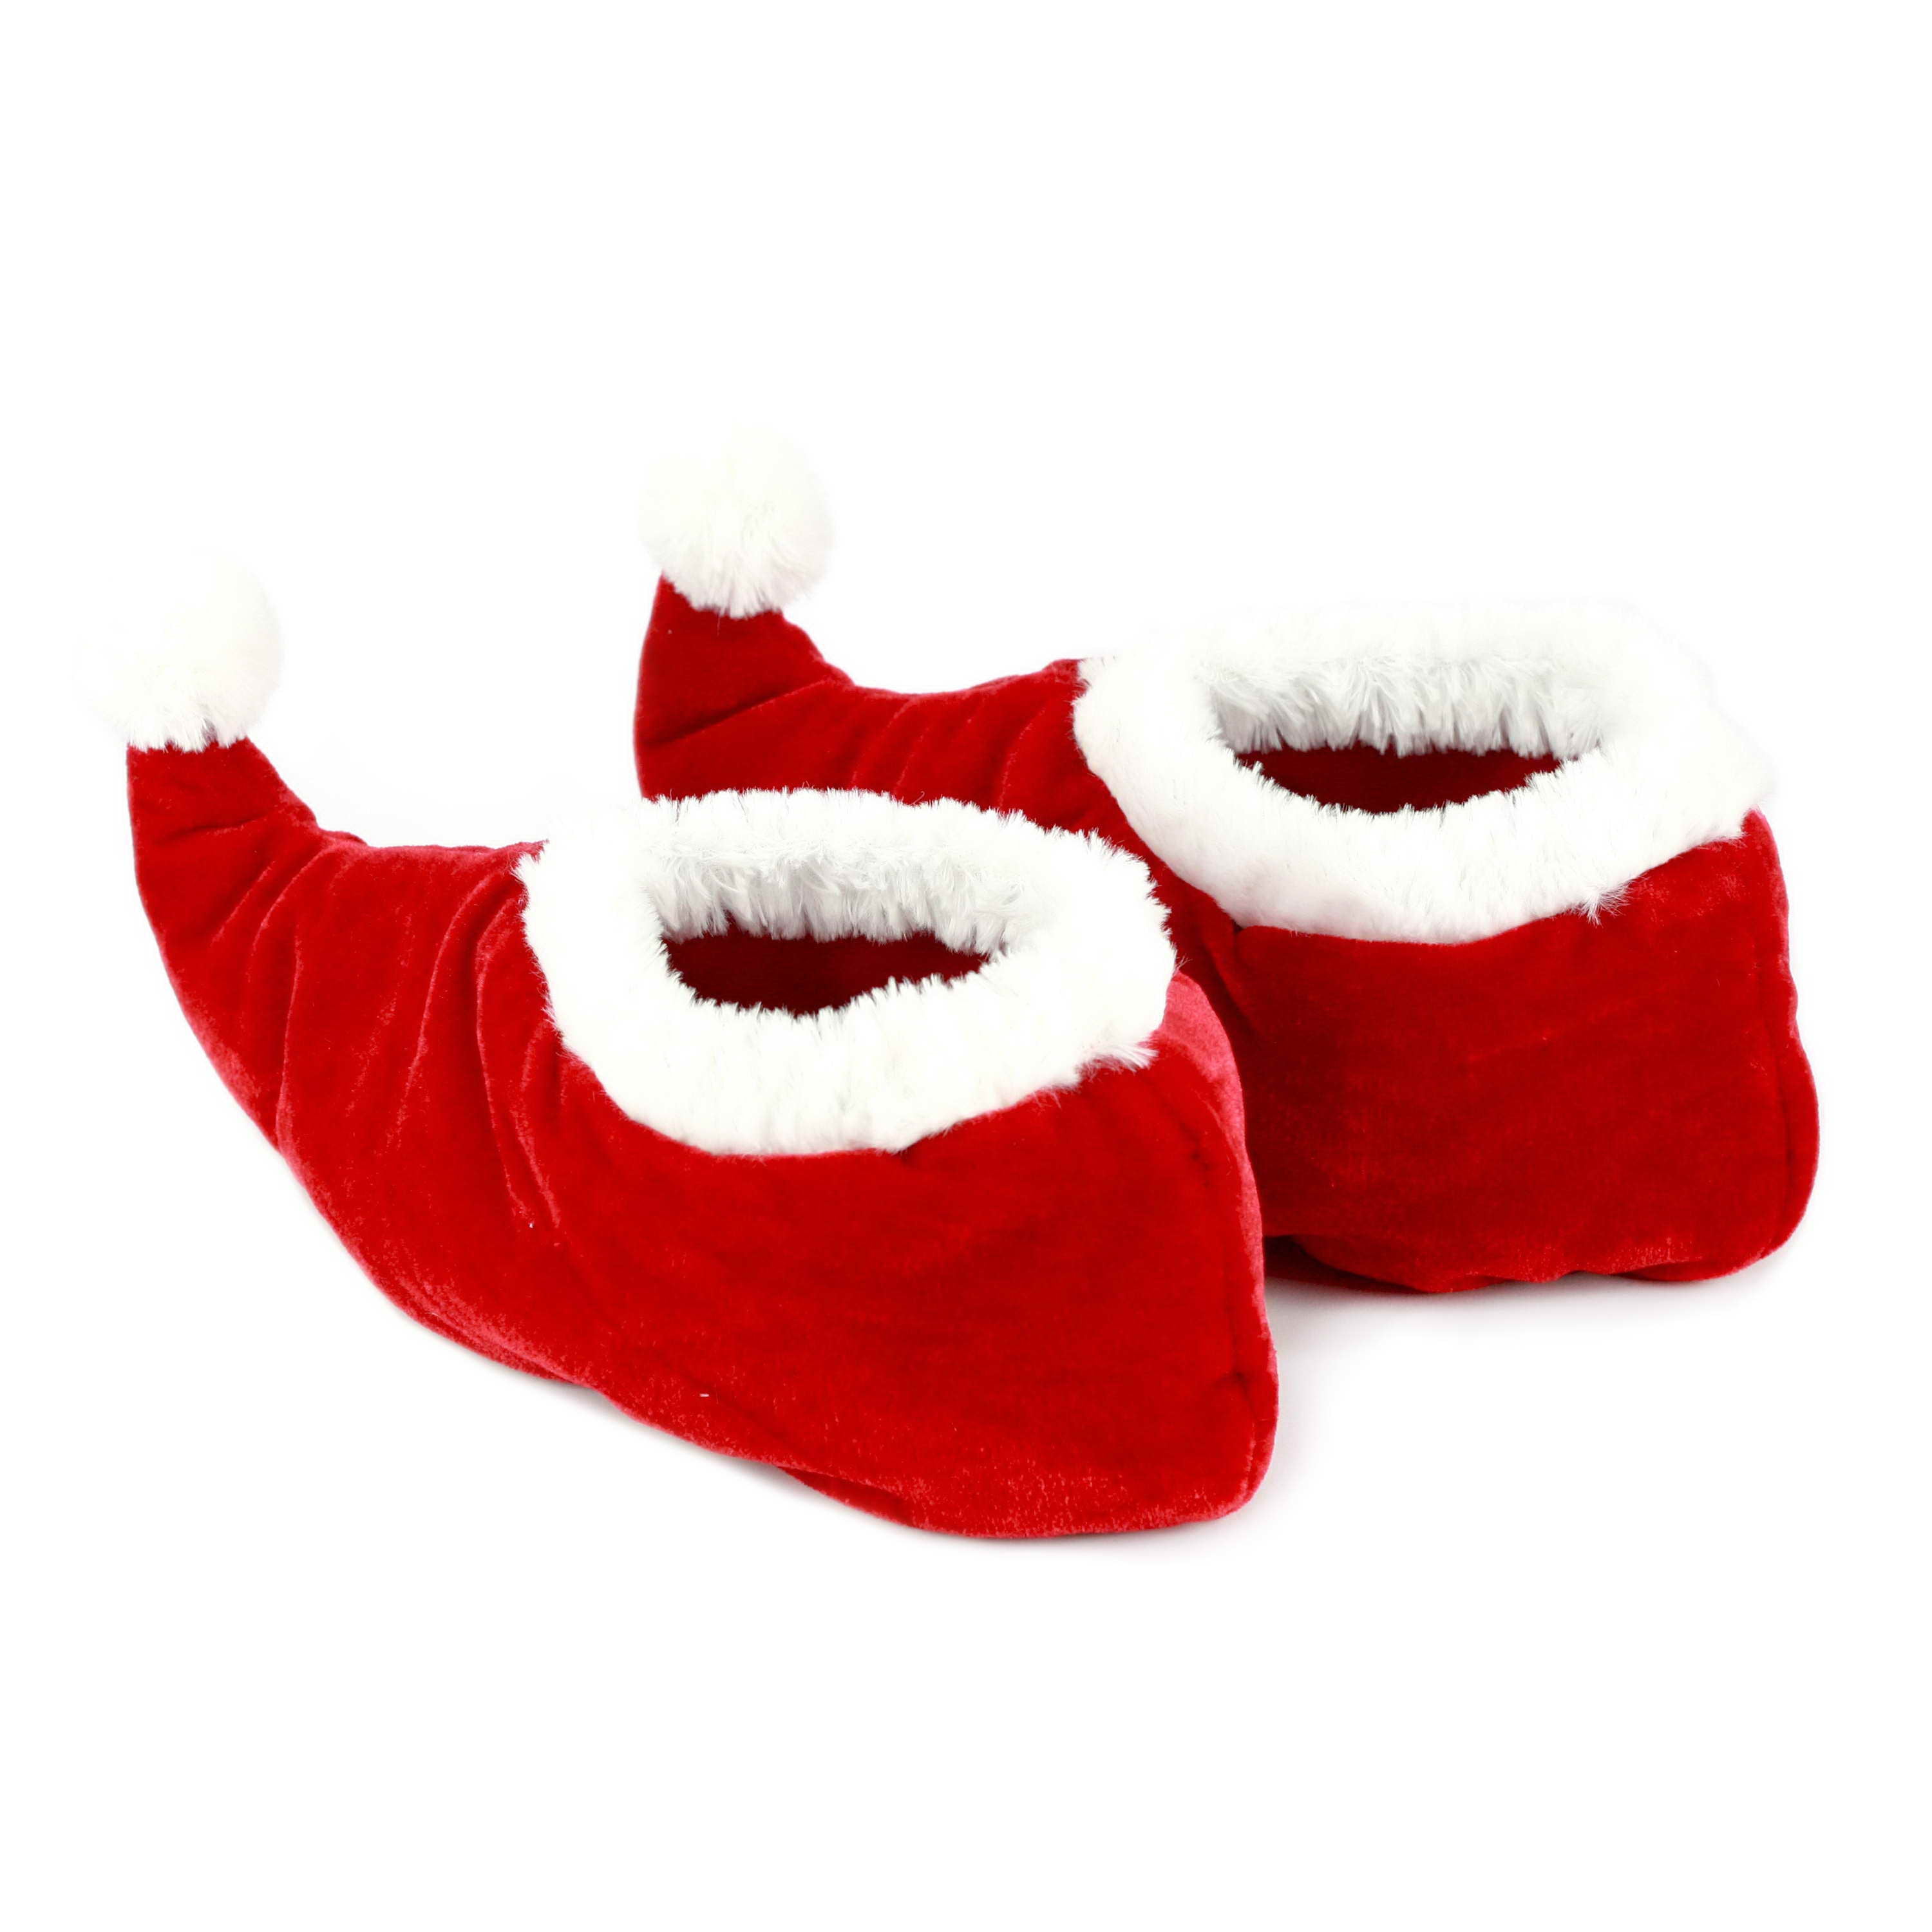 12 Inch Red Elf Shoe Covers - Walmart 